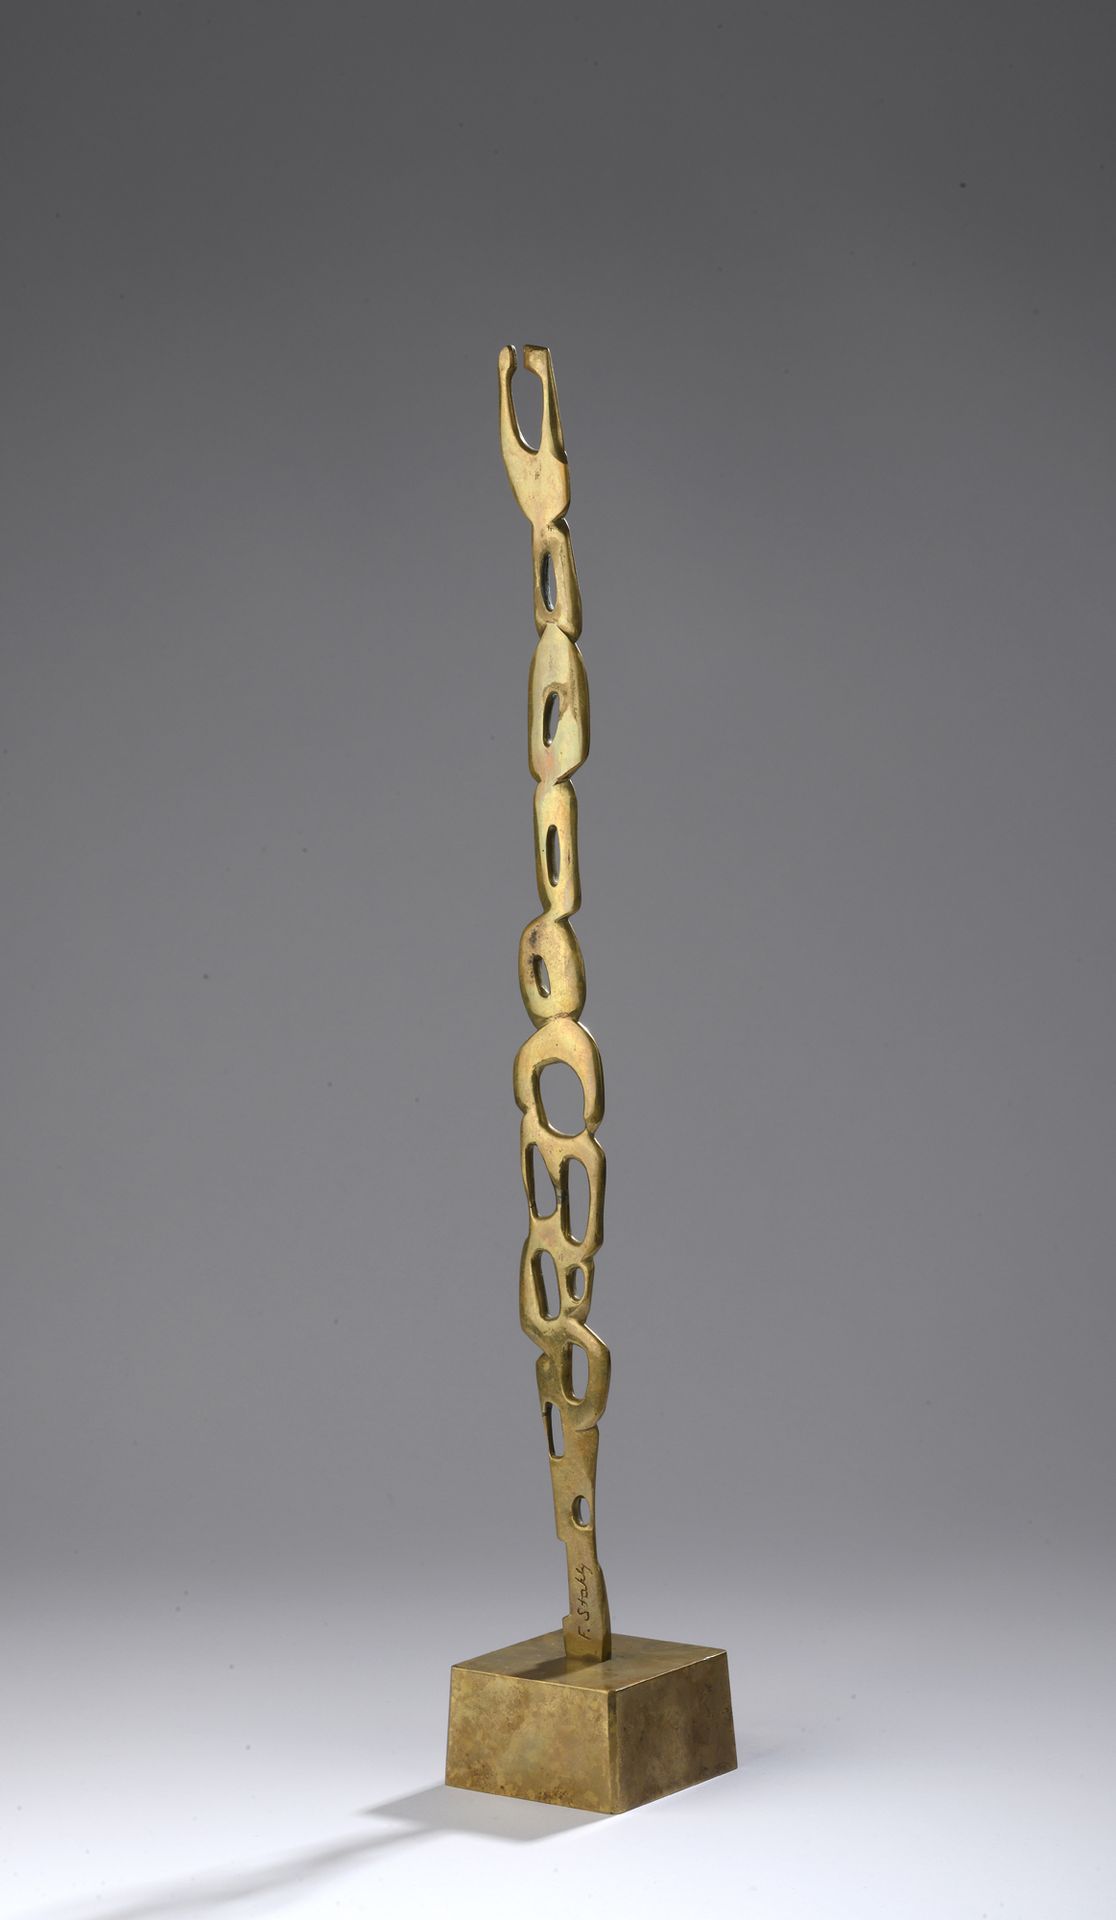 Null 弗朗索瓦-斯塔利（1911-2006）
树，1977 年
镀金青铜雕塑，背面有签名。 
小裂缝。
H.45 厘米